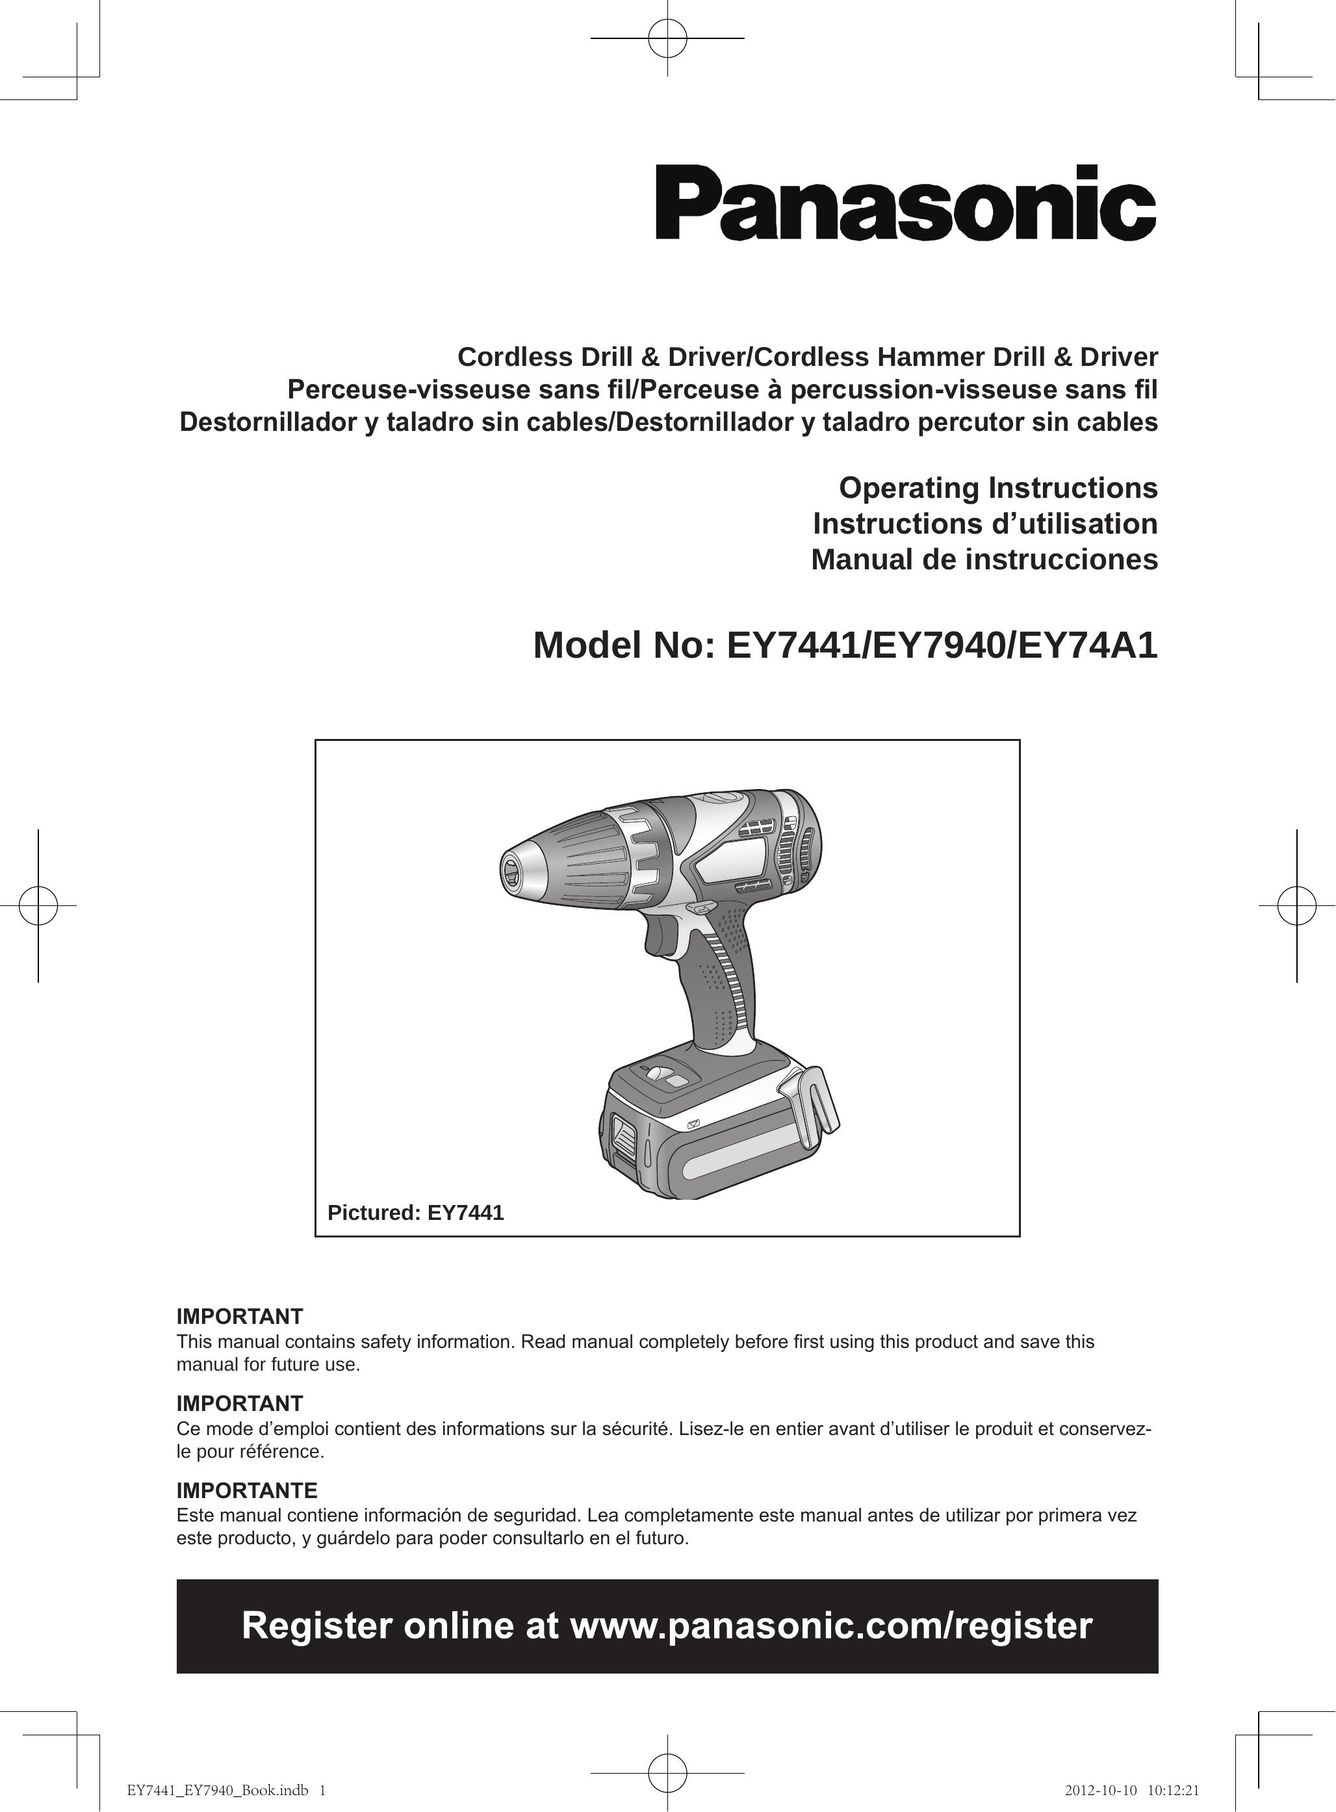 Panasonic EY74A1 Cordless Drill User Manual